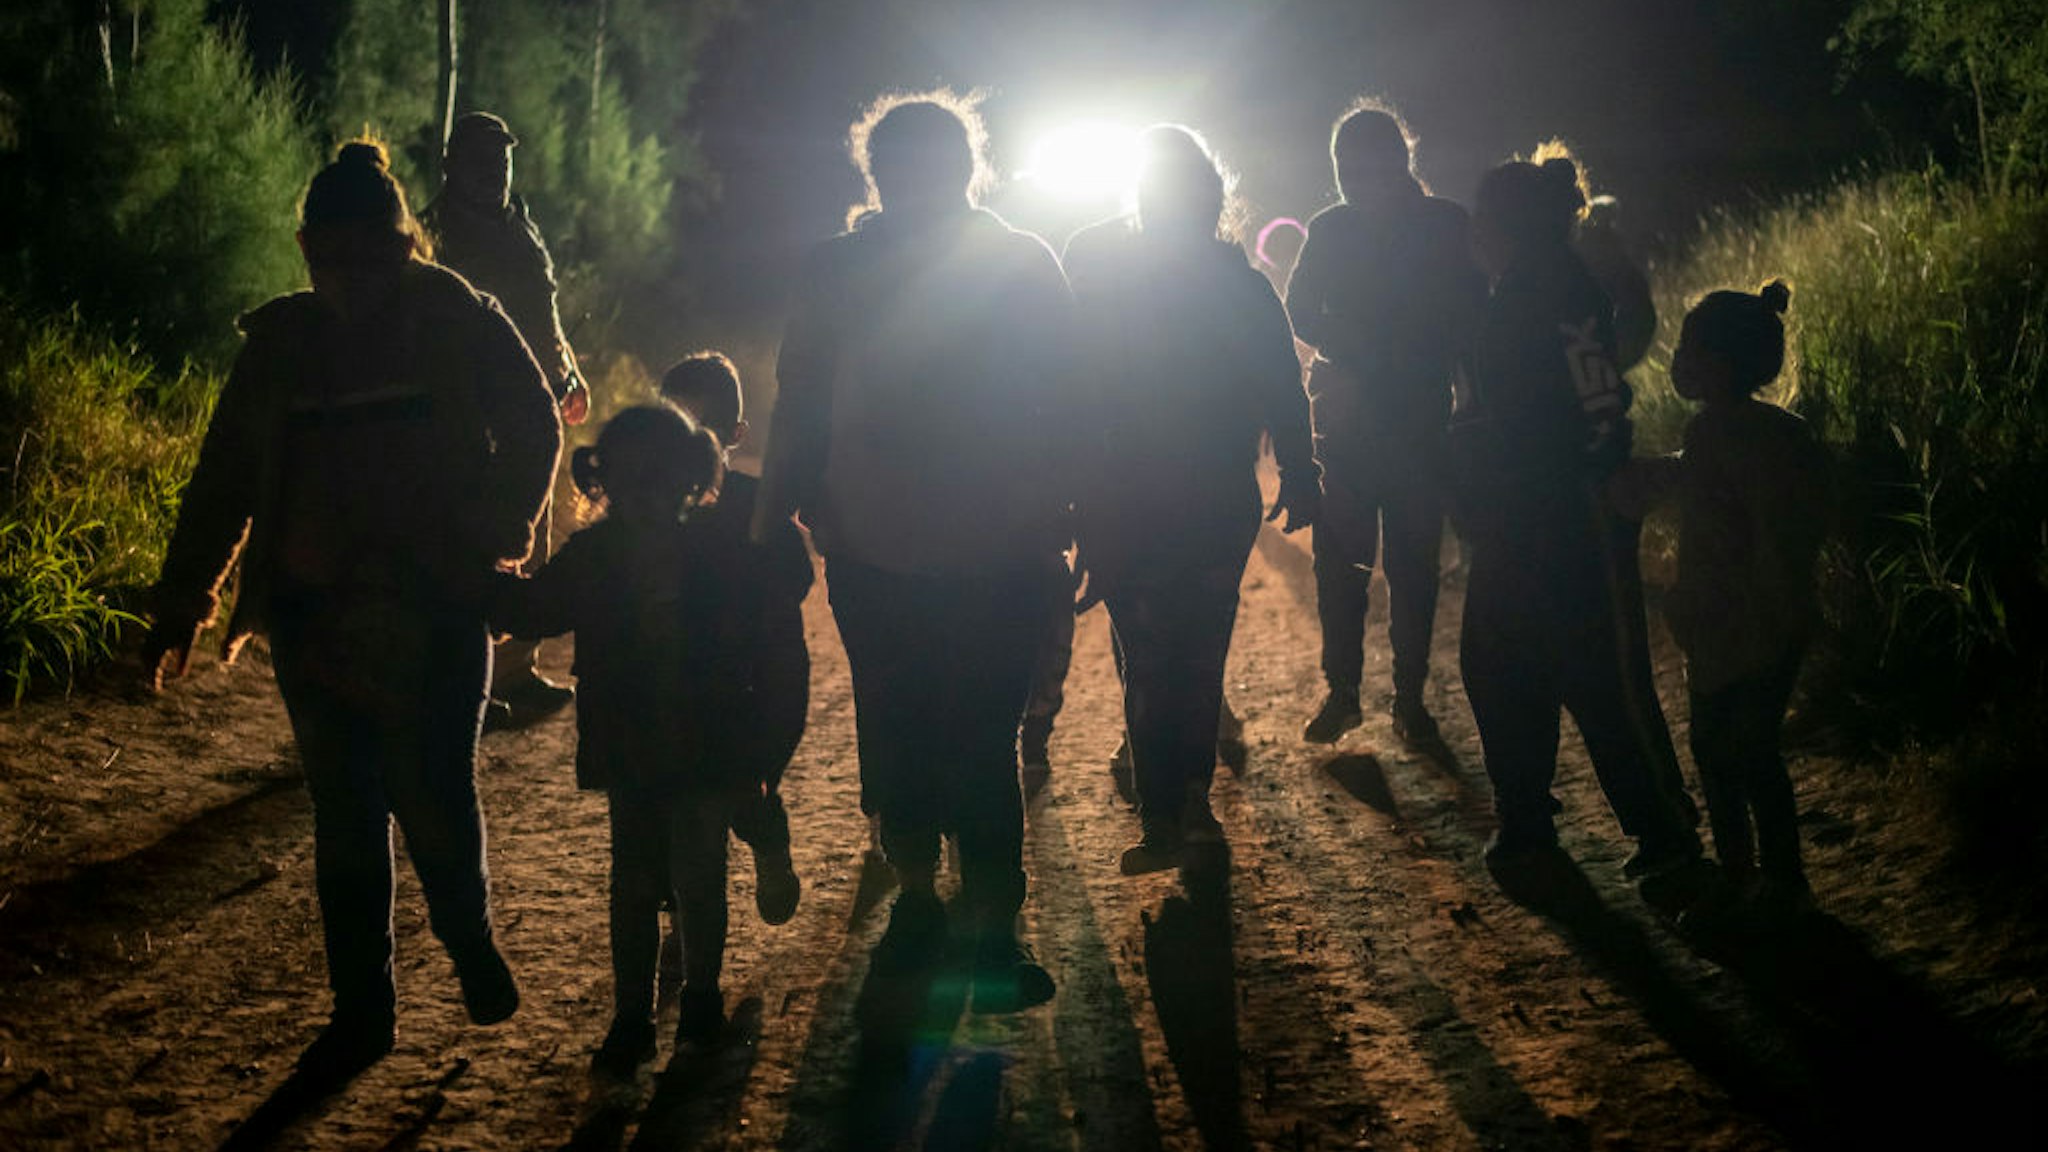 Migrants begin to arrive in growing numbers at border